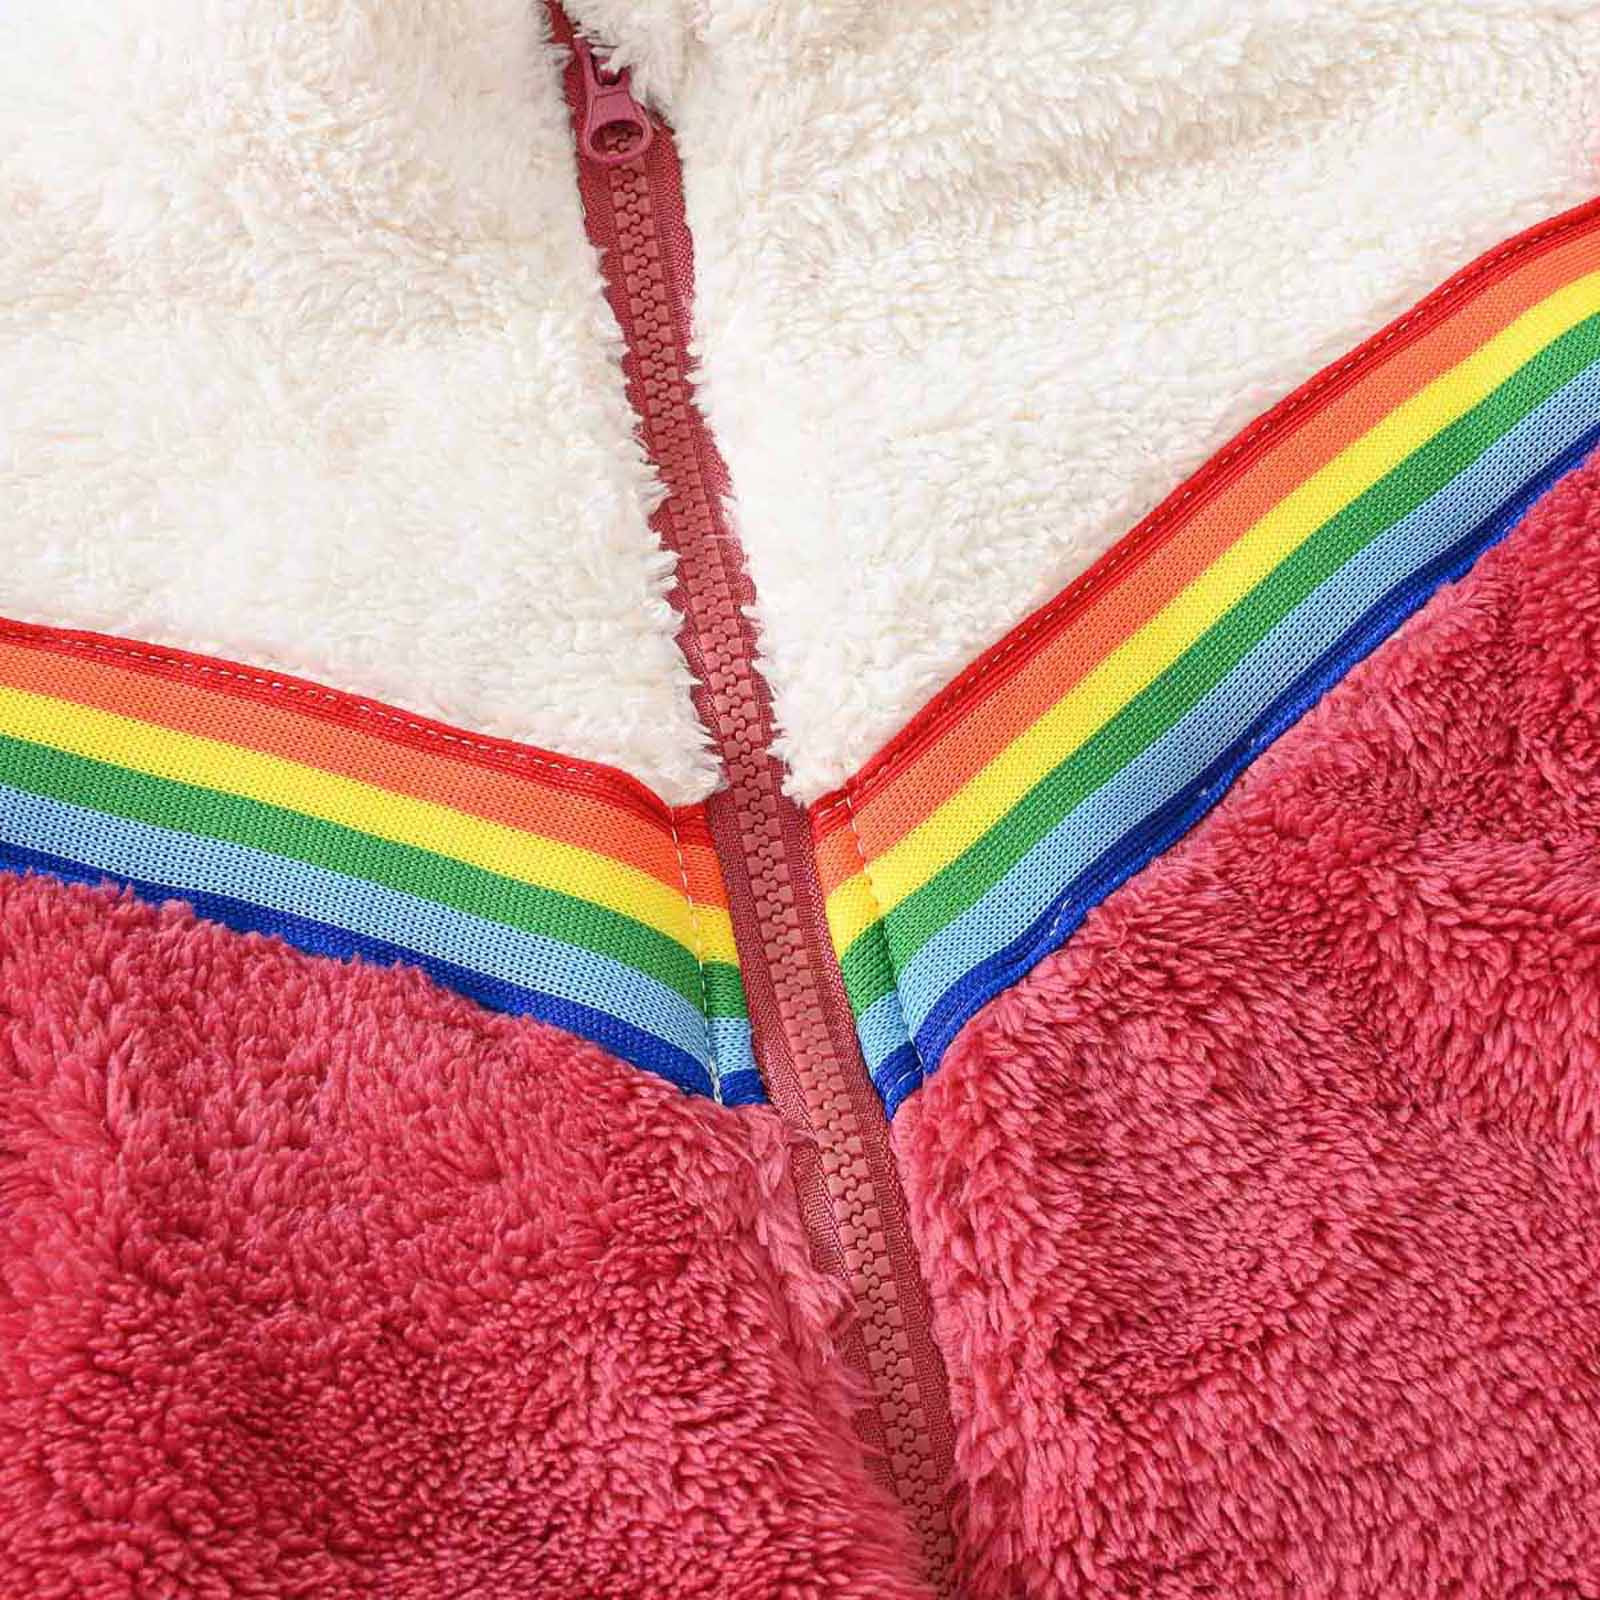 YYDGH Girls Zipper Jacket Fuzzy Sweatshirt Long Sleeve Casual Cozy Fleece Sherpa Outwear Coat Full-Zip Rainbow Jackets(Red,2-3 Years) - image 5 of 8